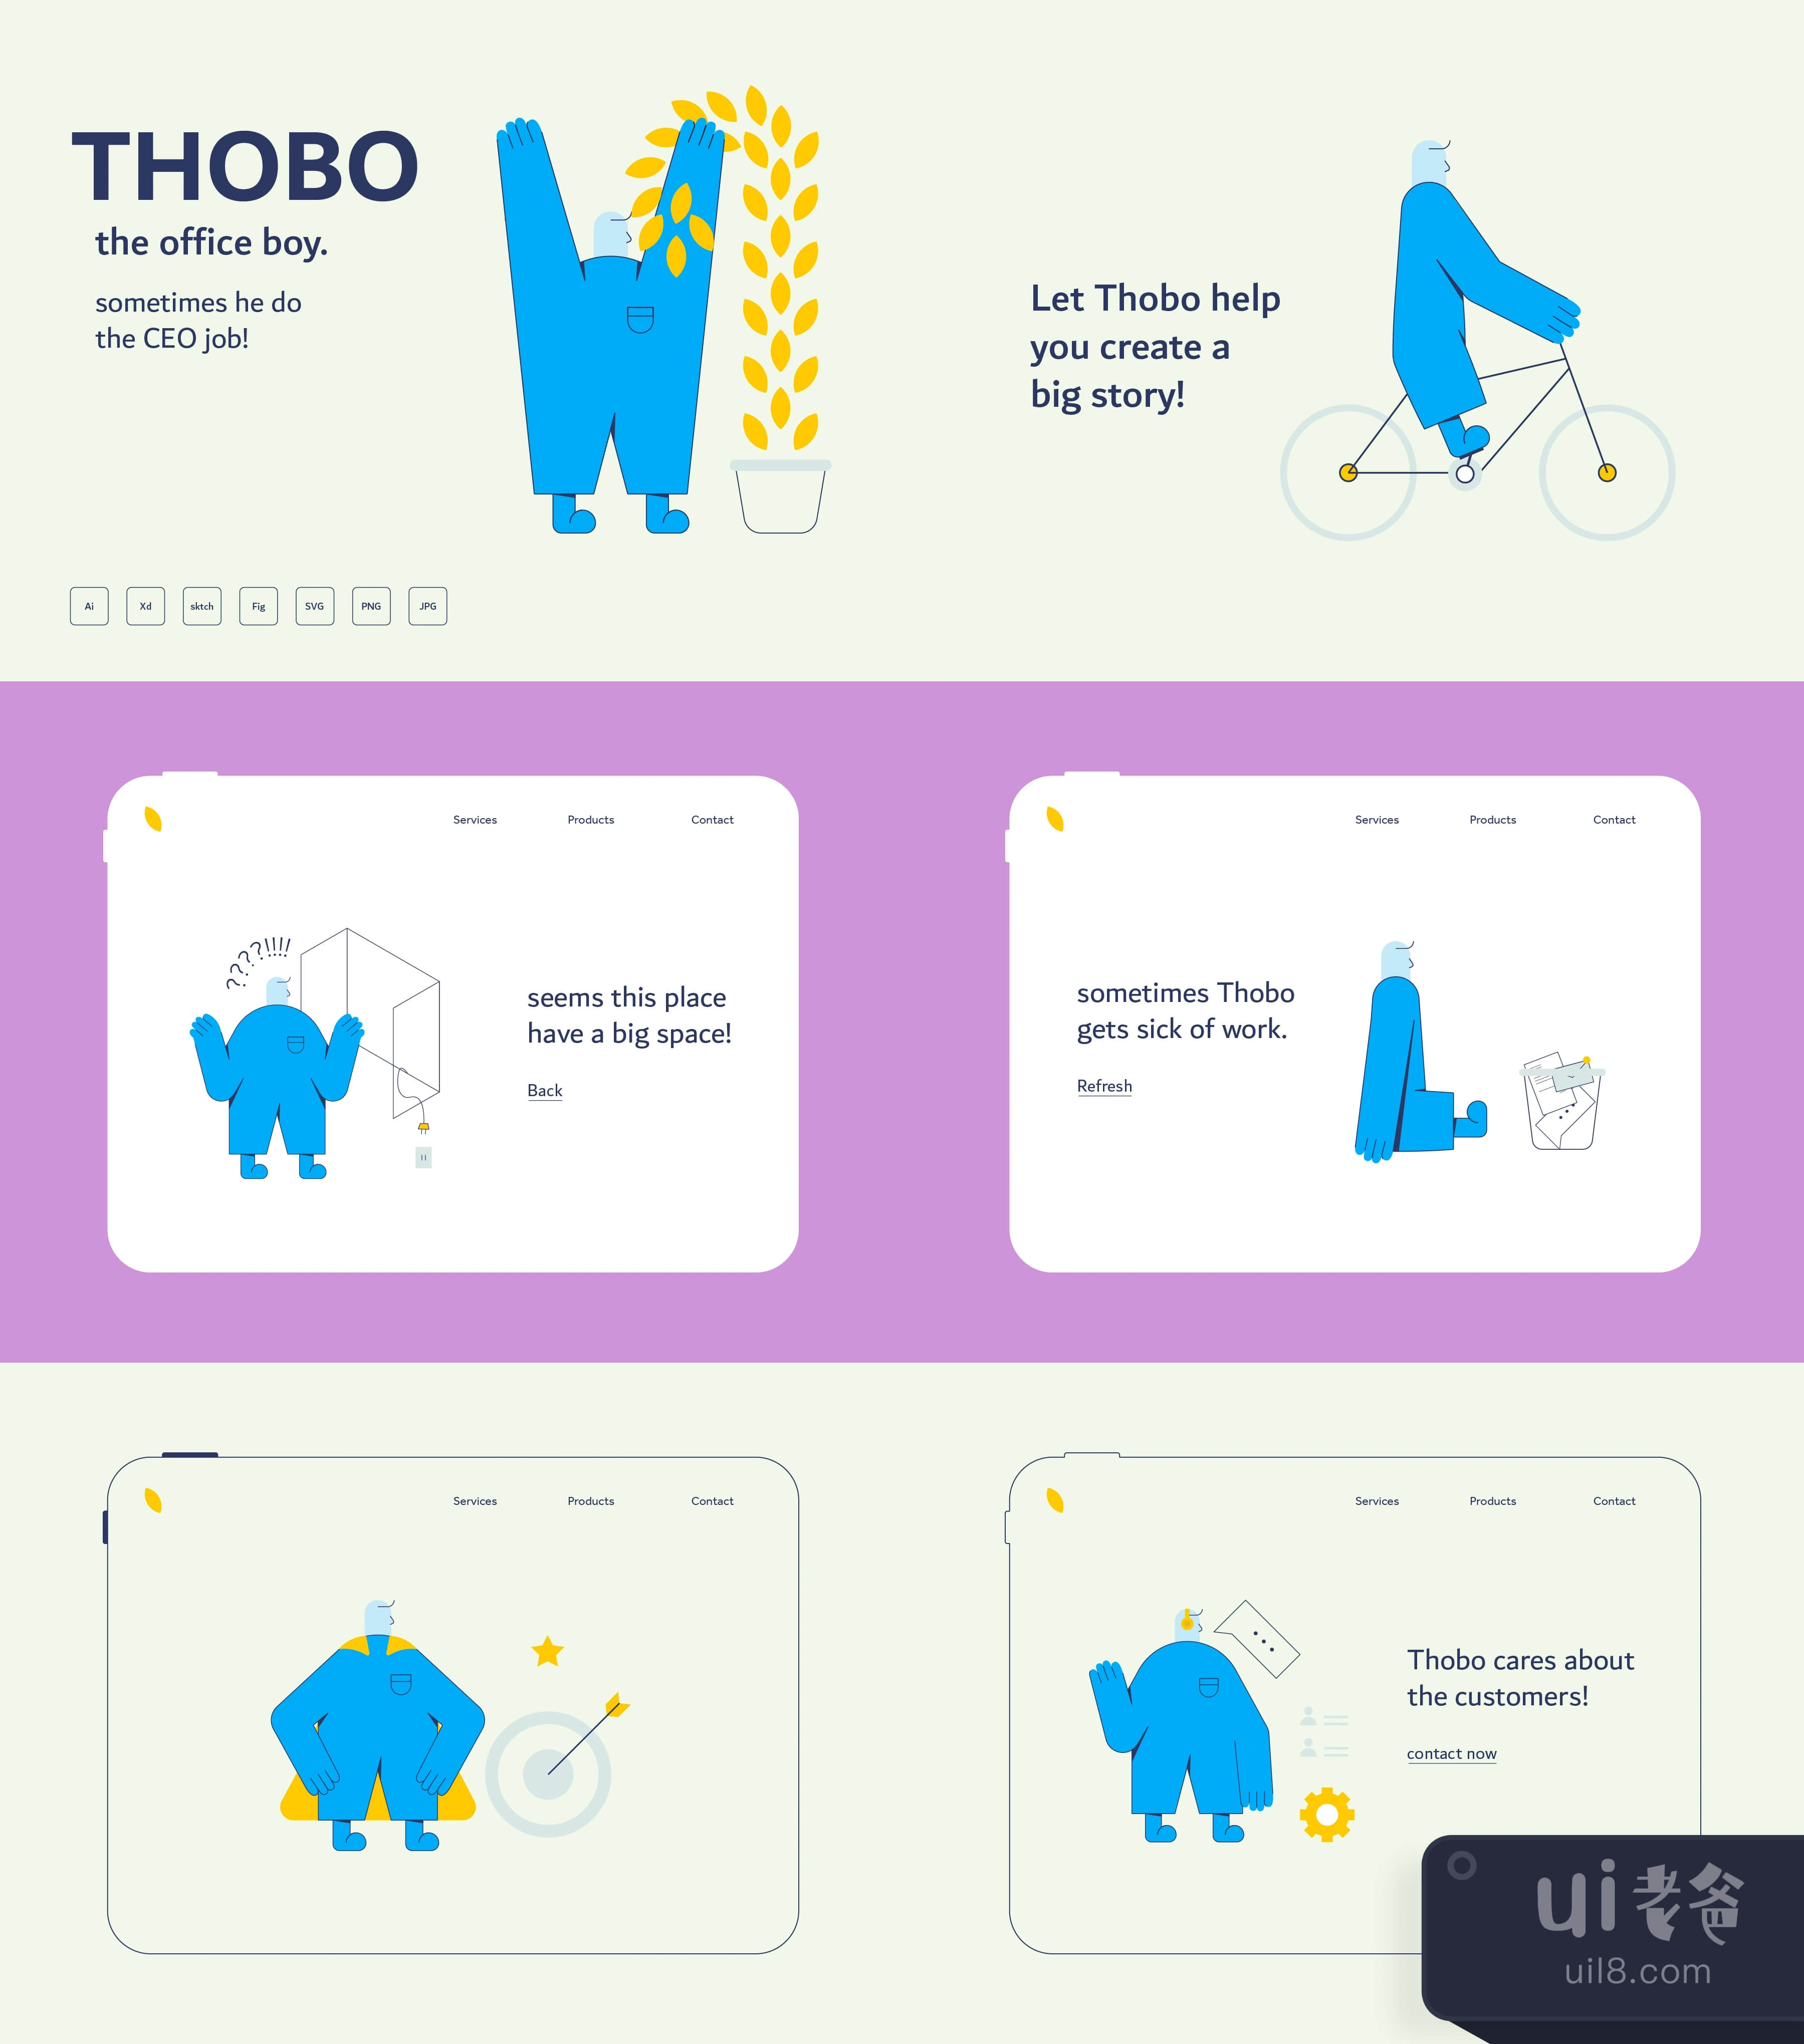 Thobo - 办公室男孩 (Thobo - the office boy)插图1